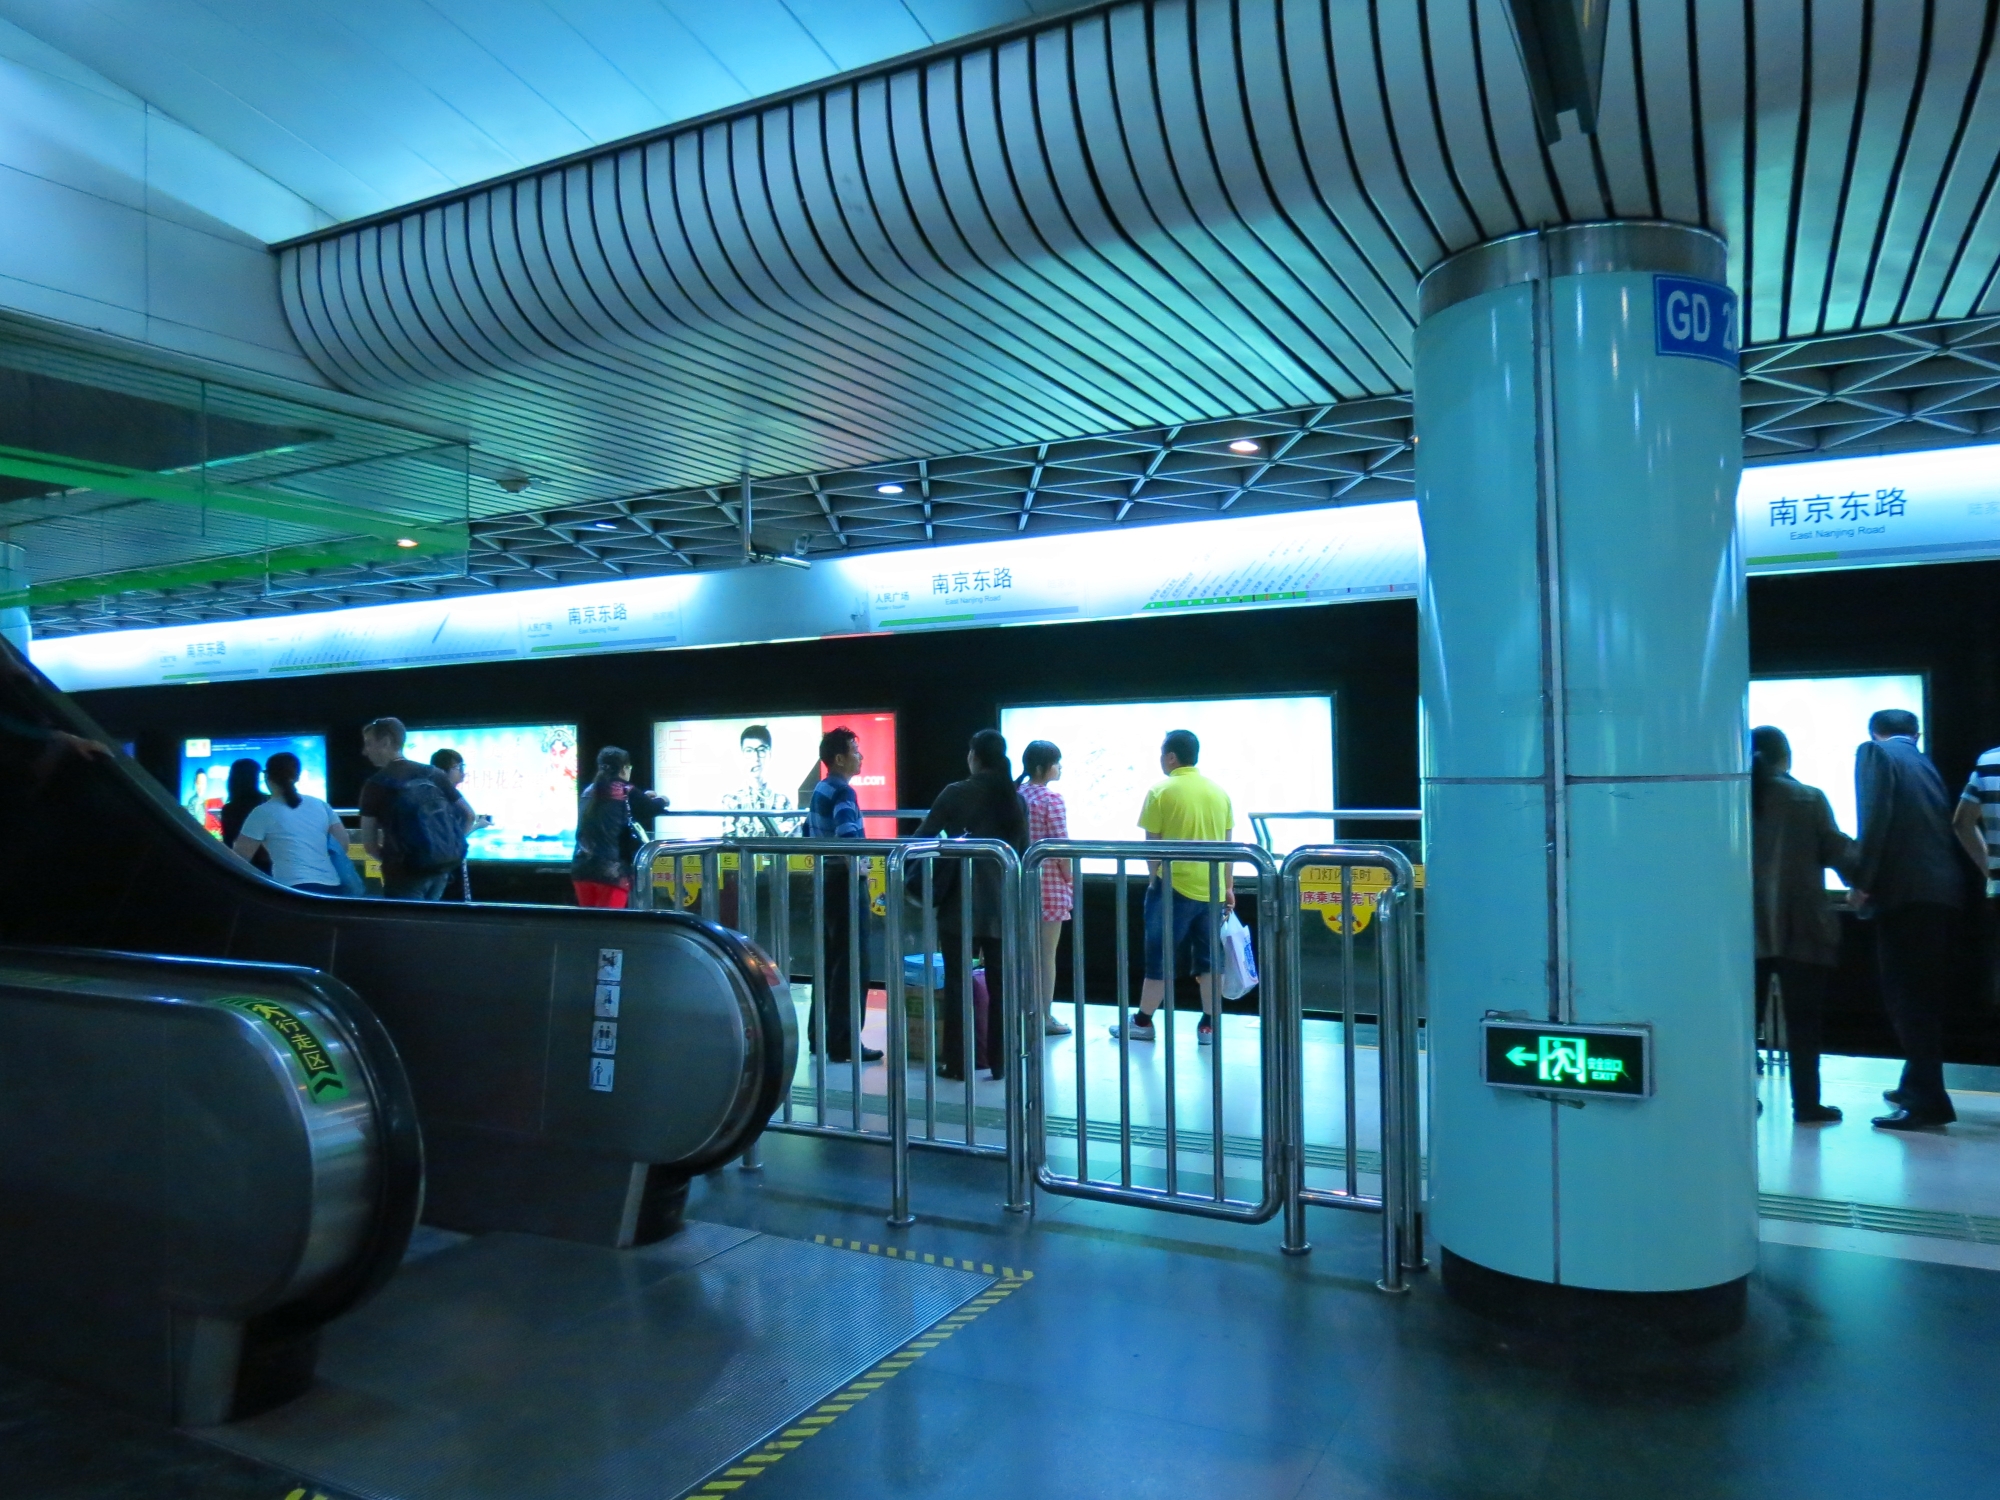 Аэропорт Шанхай Пудун. Метро Шанхая. Аэропорт Шанхая транзитная зона. Поезд аэропорт - Шанхай Пудун. Шанхай аэропорт прилет